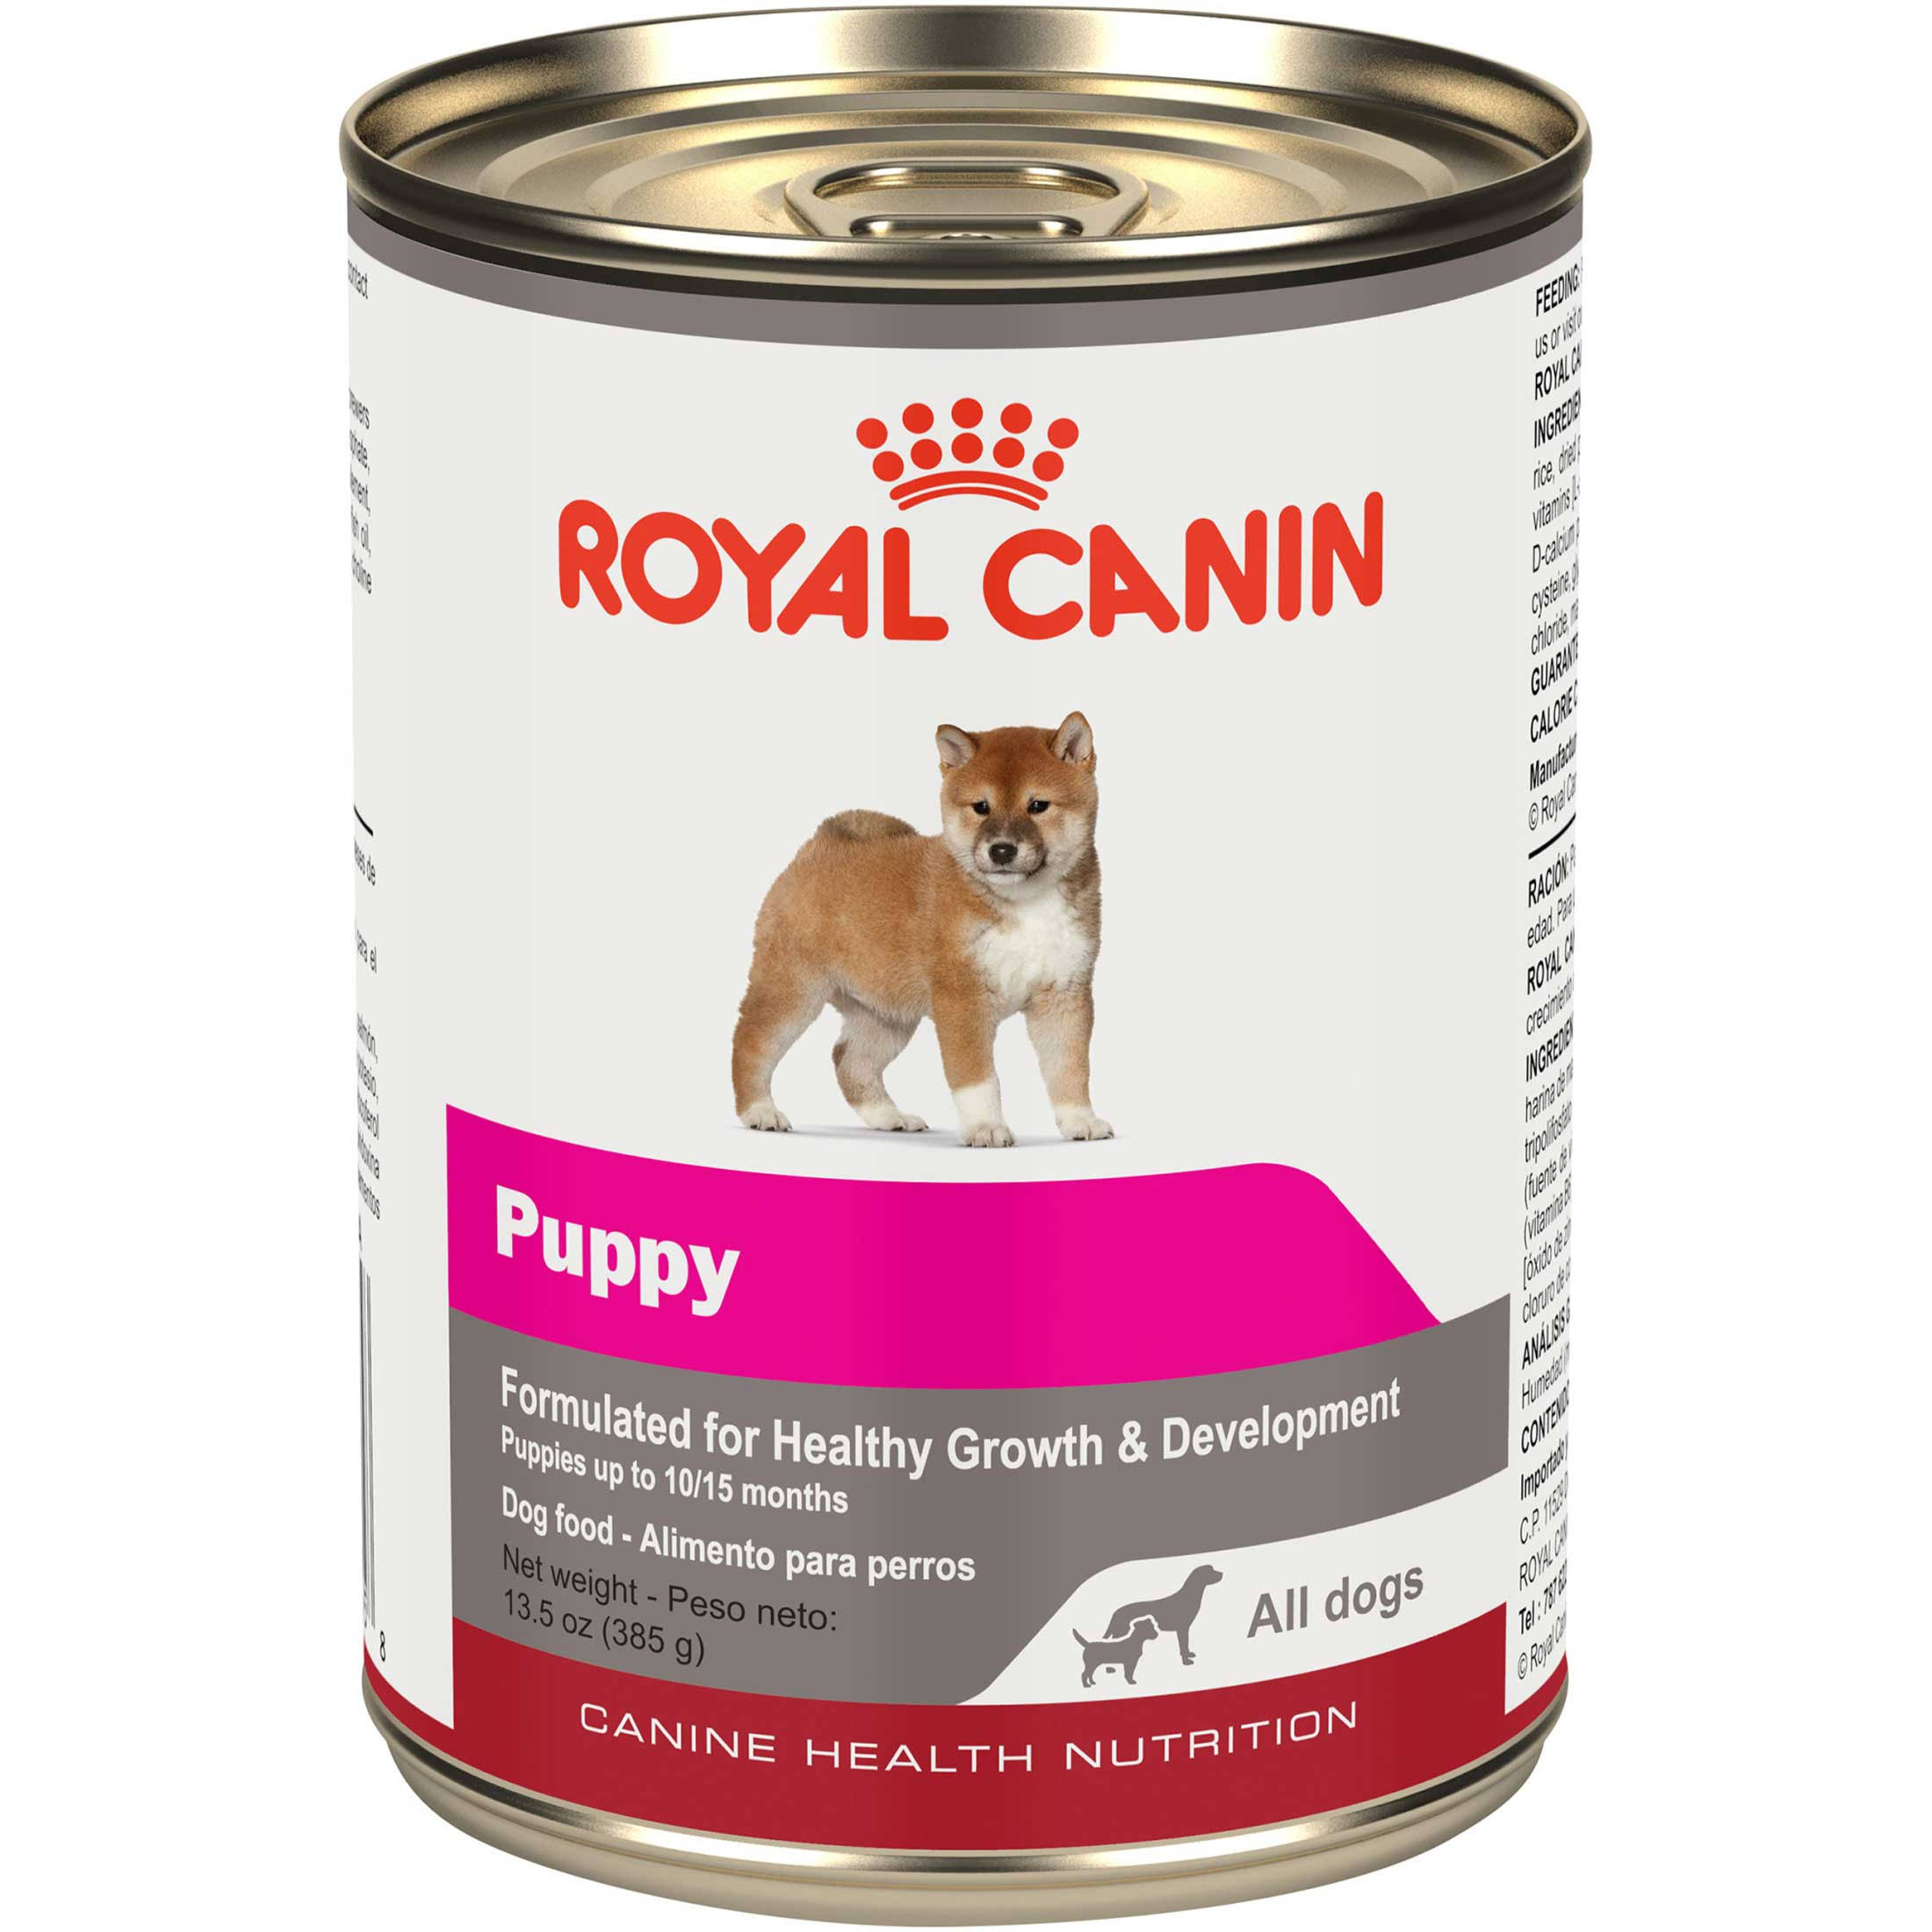 Royal Canin Canine Health Nutrition Puppy Gel Canned Dog Food - 13.5oz